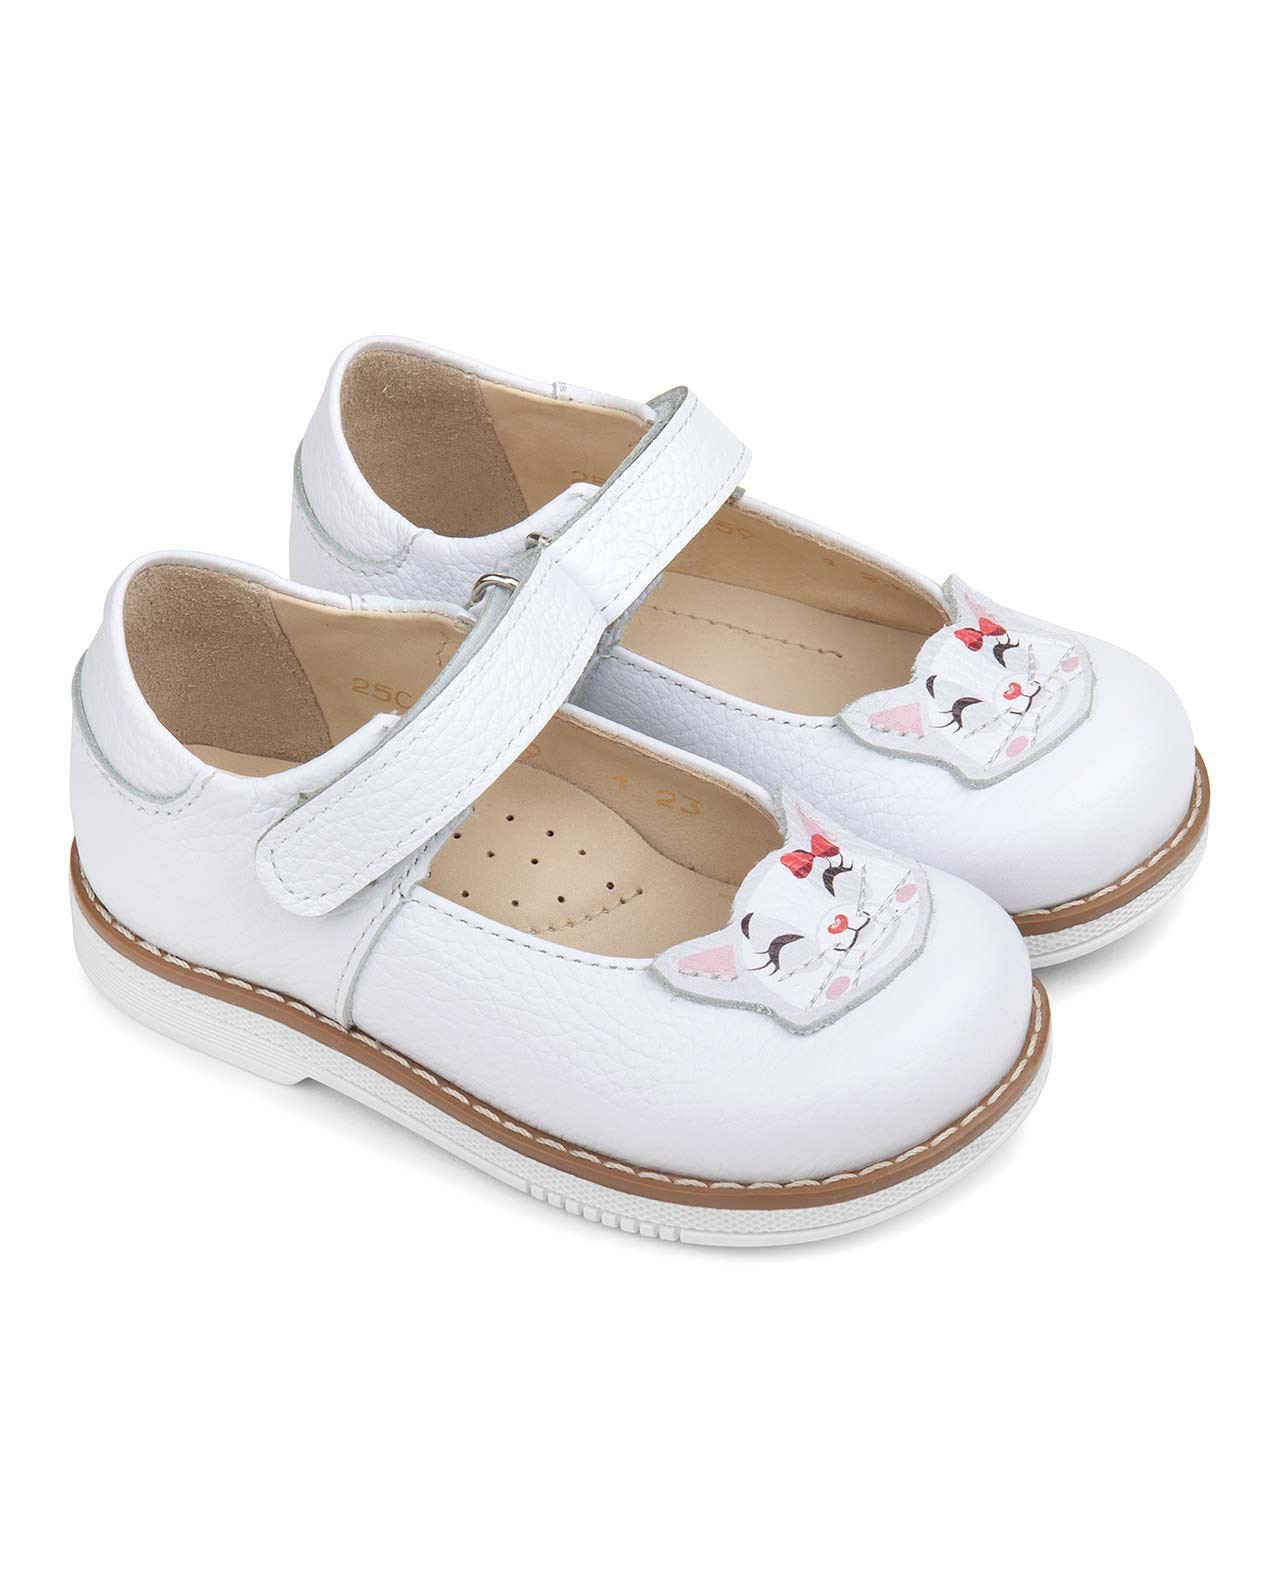 Туфли детские TAPIBOO ХОББИ кошка (81455, 32) сандалии детские tapiboo хобби камелия 77254 32